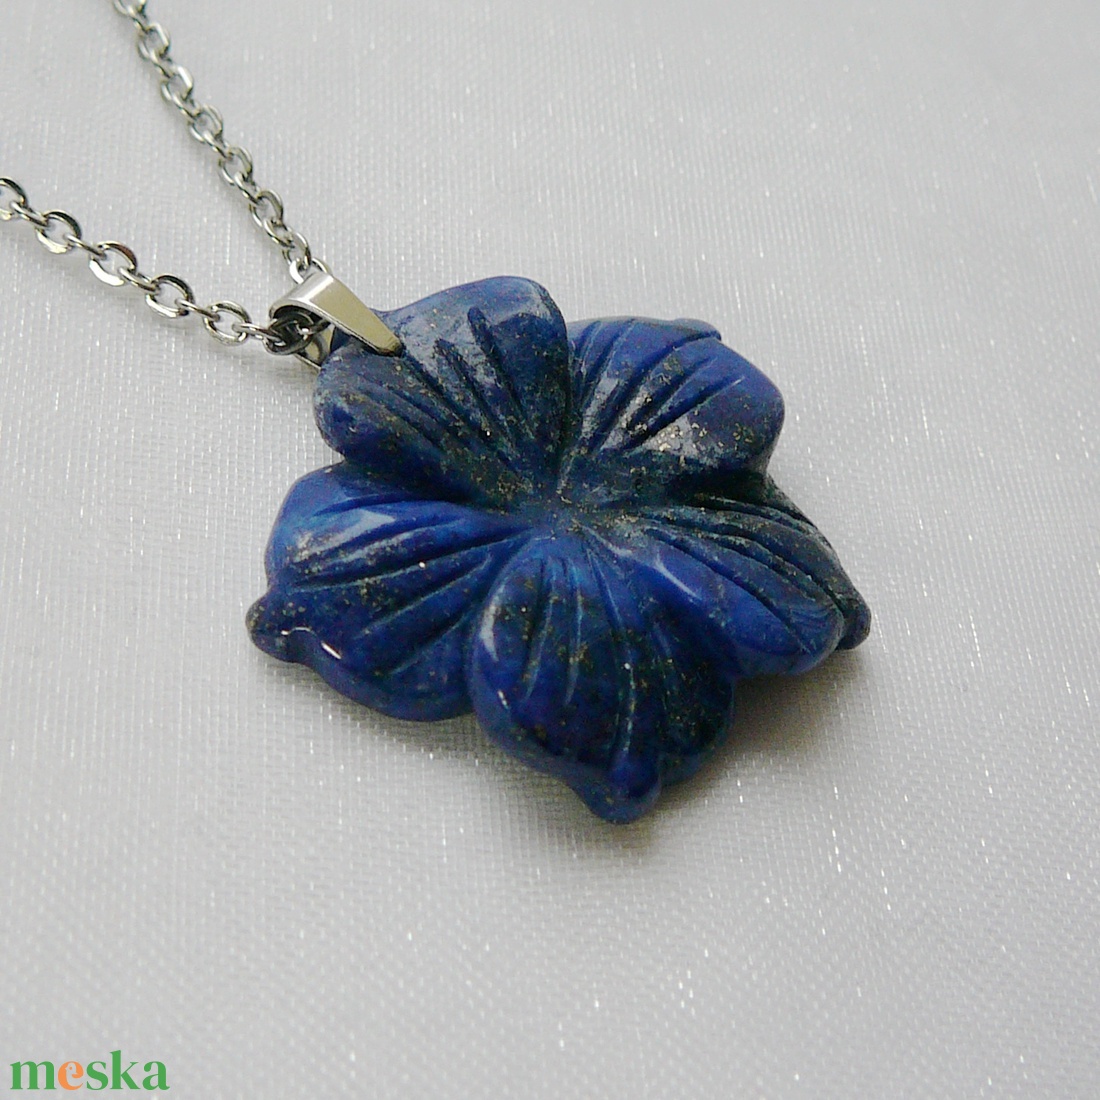 Lápisz lazuli virág medálos nyaklánc - ékszer - nyaklánc - medálos nyaklánc - Meska.hu